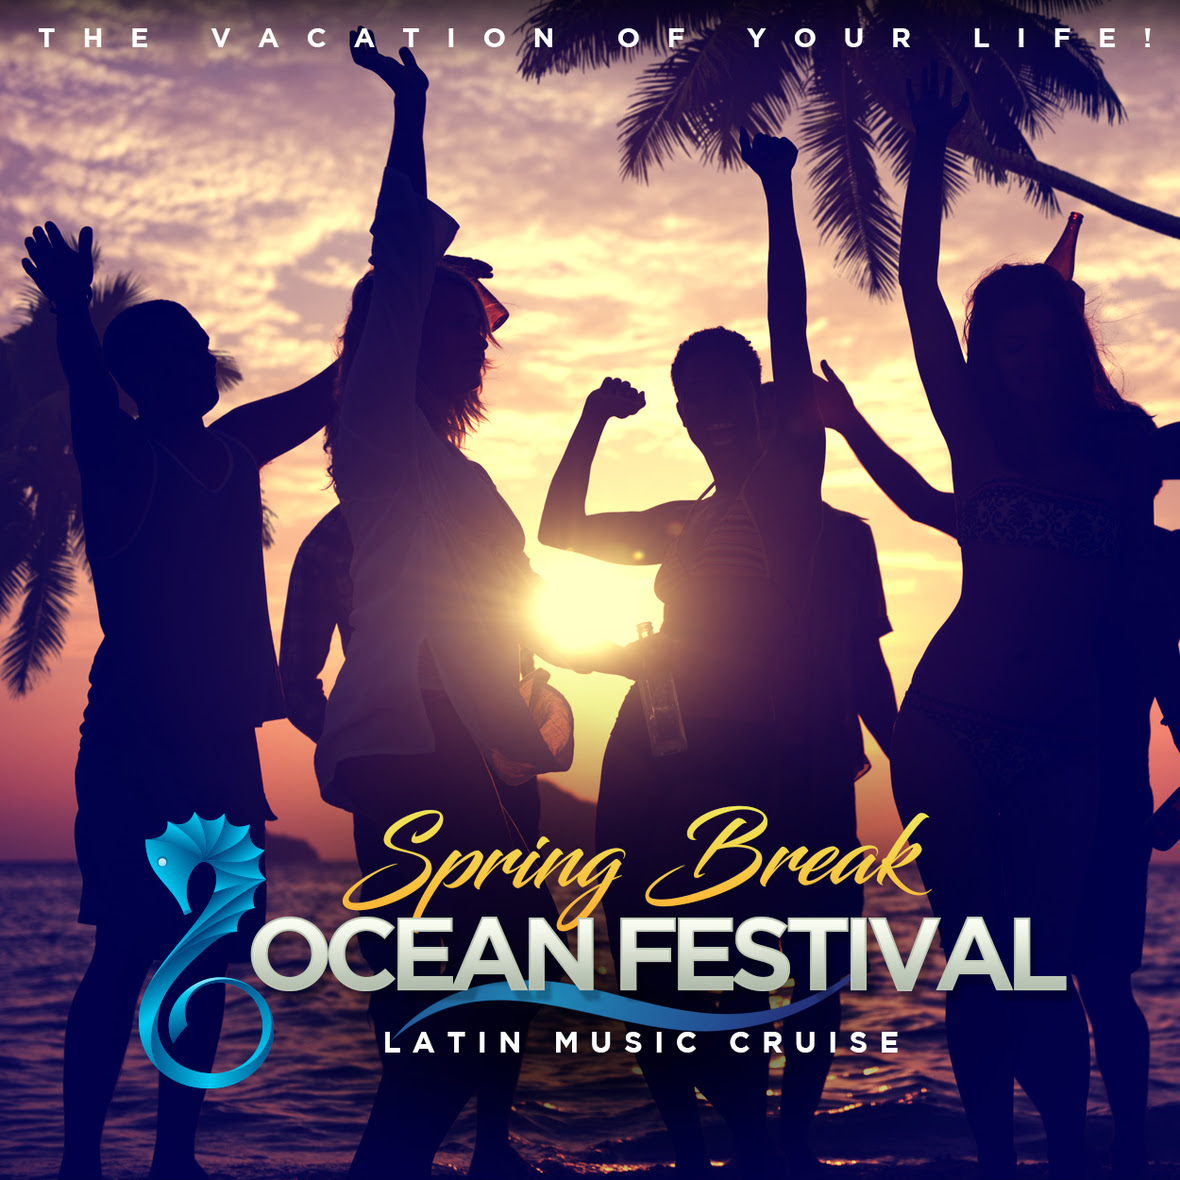 Spring Break Ocean Festival primer festival de música latina sobre el